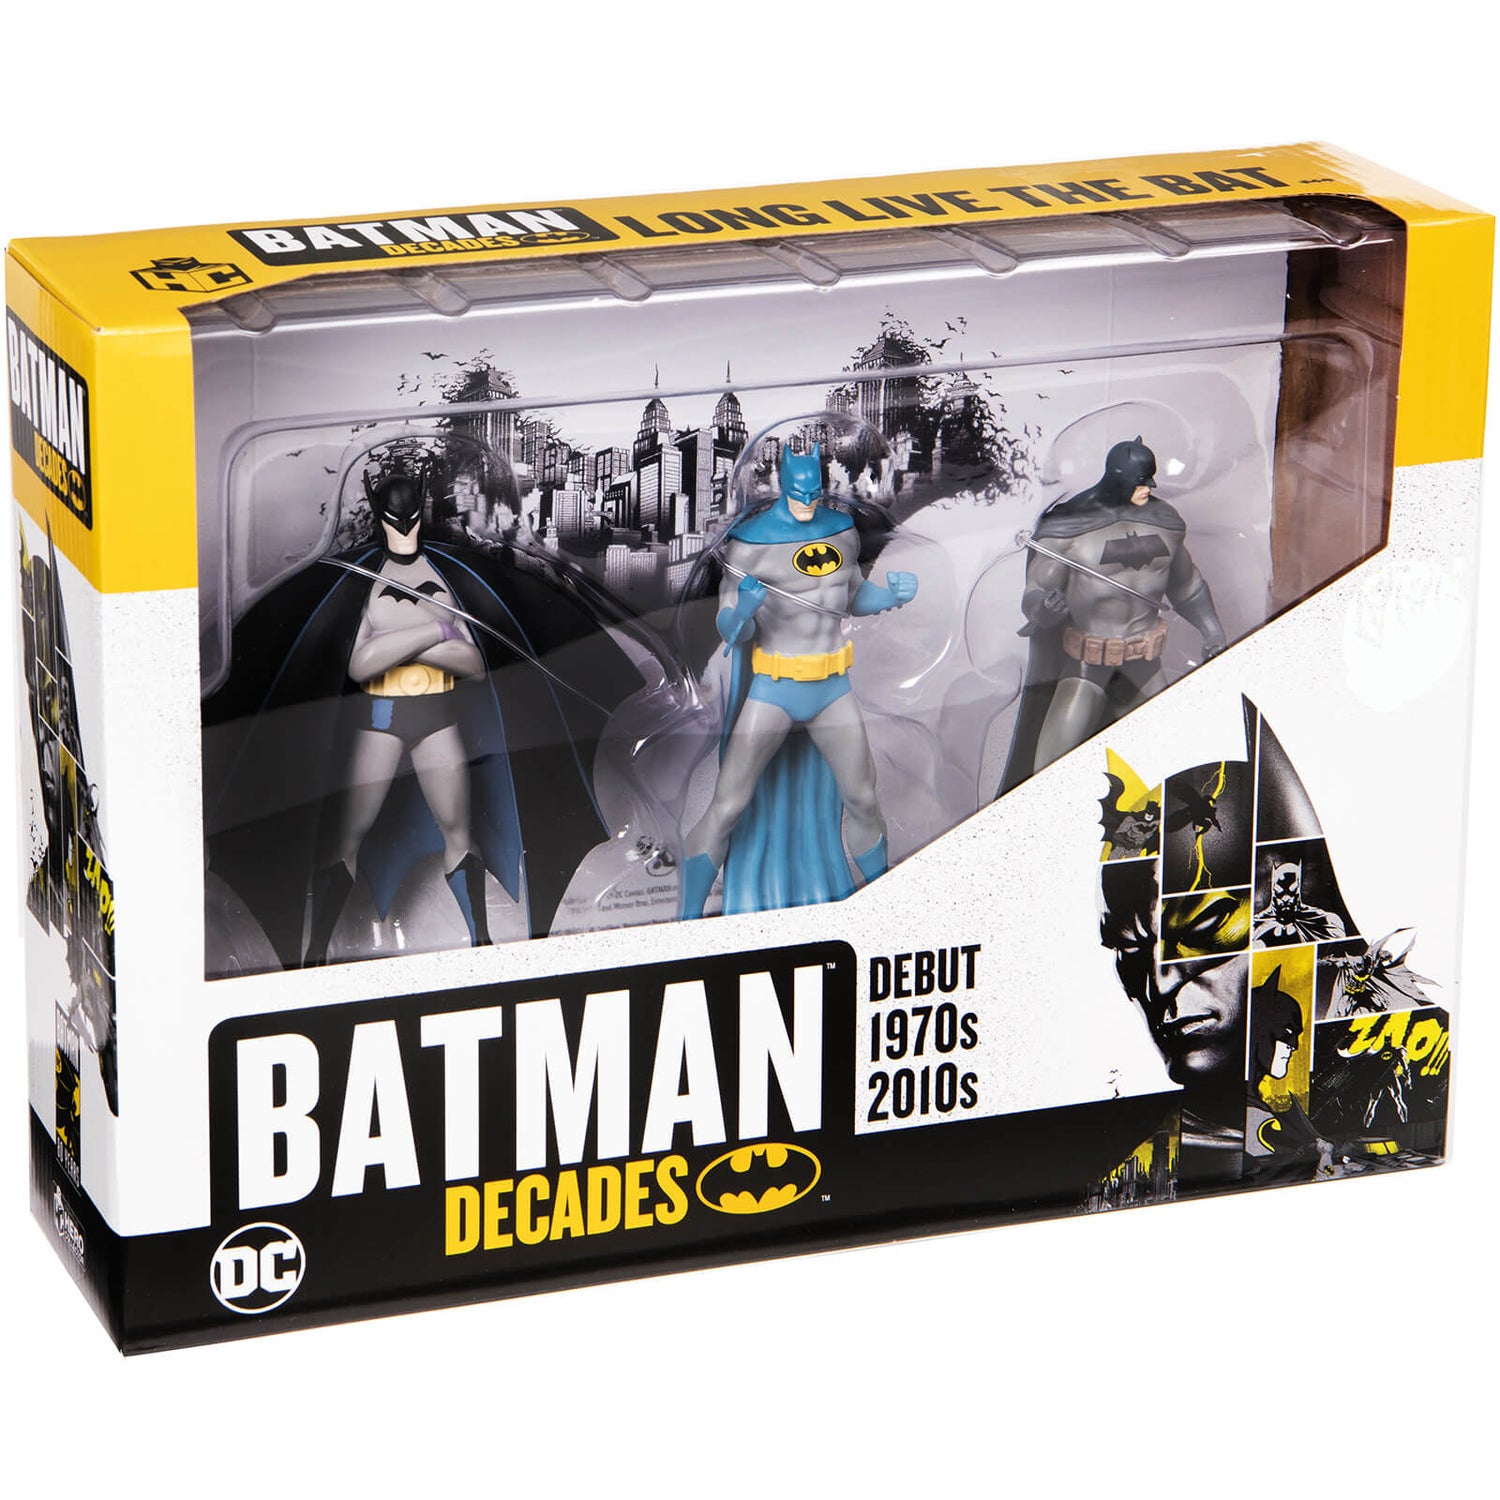 Eaglemoss Batman Decades Figurine Box Set (Debut 1970s 2010s